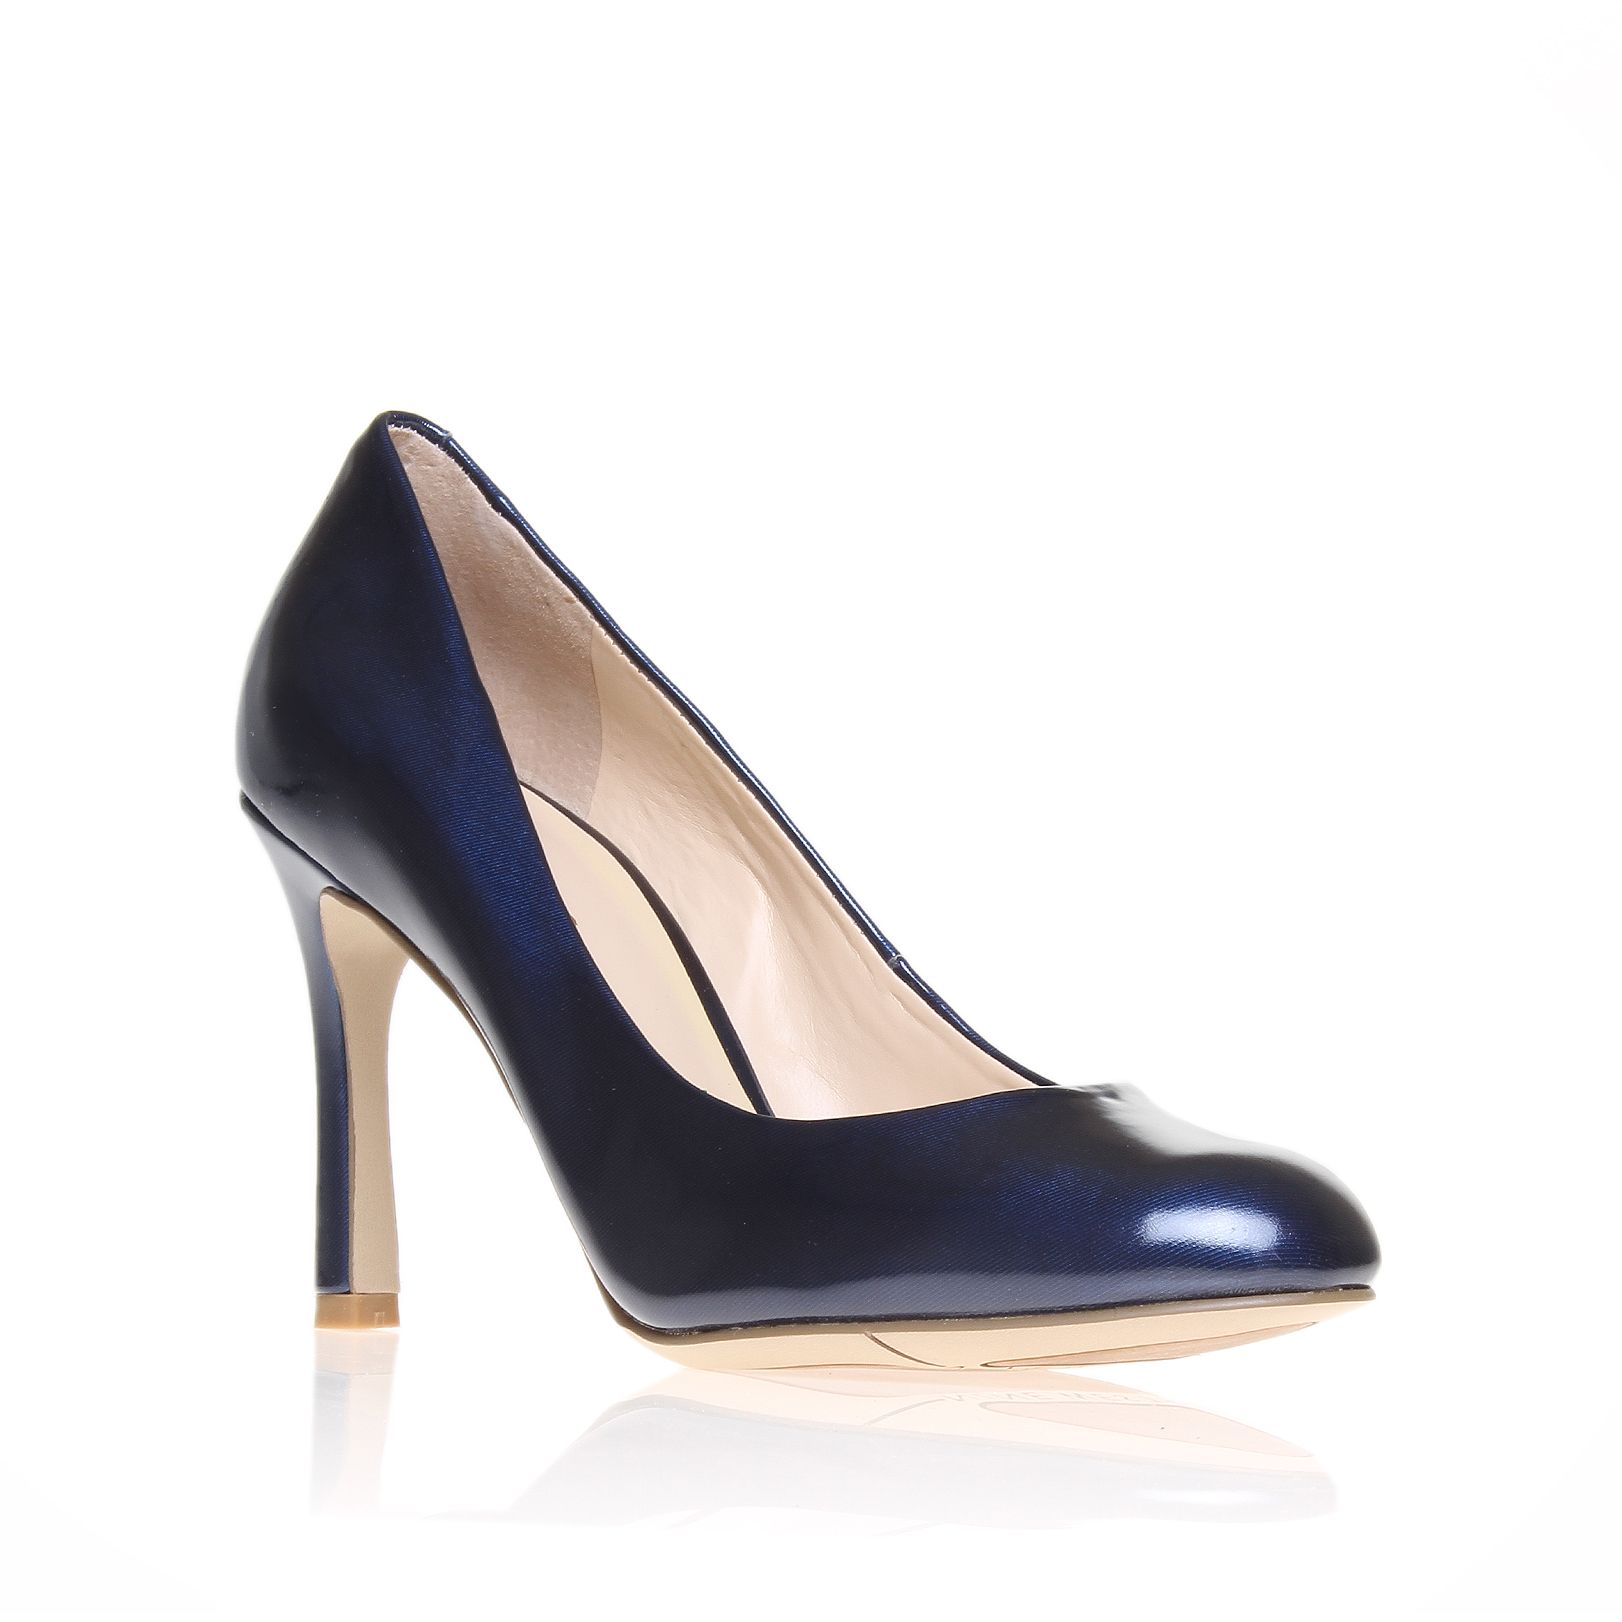 Nine West Drusilla3 Court Shoes in Navy (Blue) - Lyst